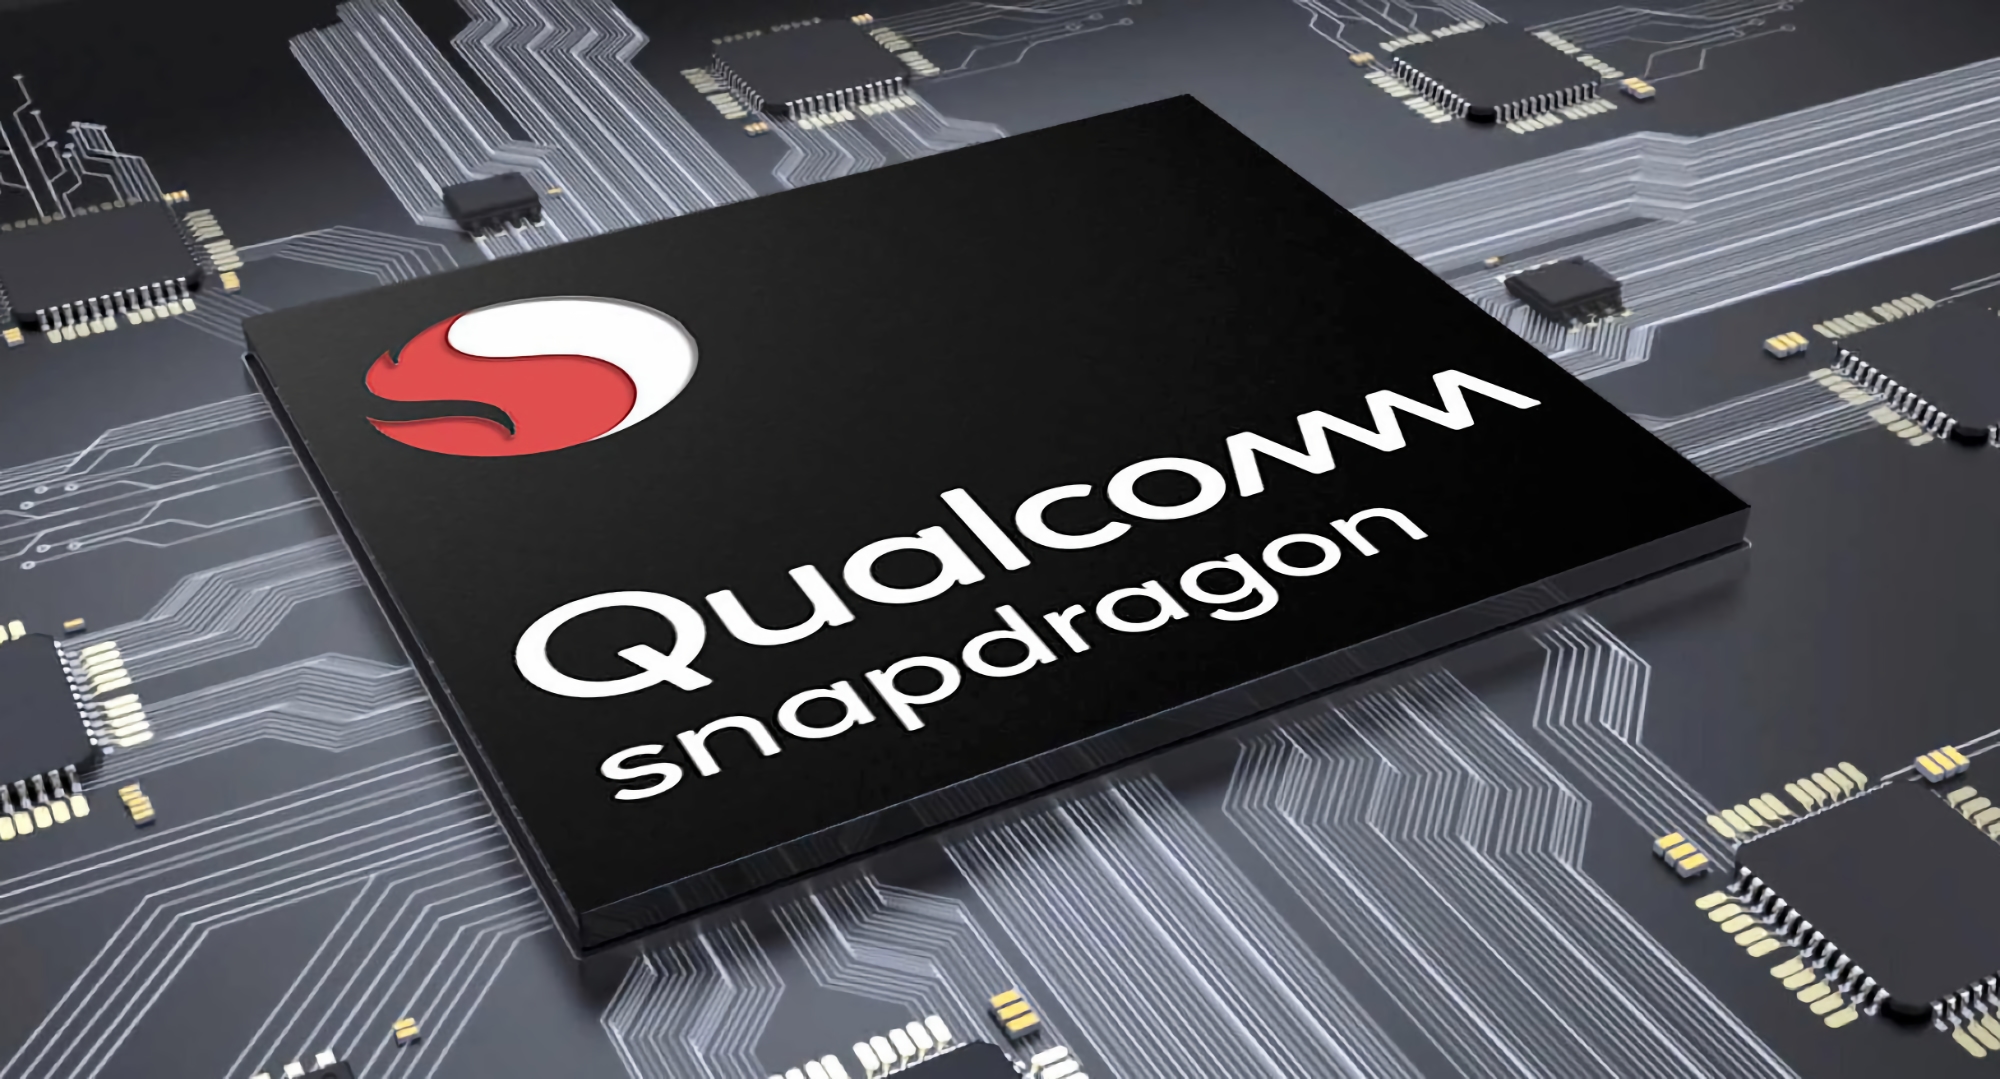 Gerücht: Qualcomms nächster Flaggschiff-Chip soll Snapdragon 898 heißen